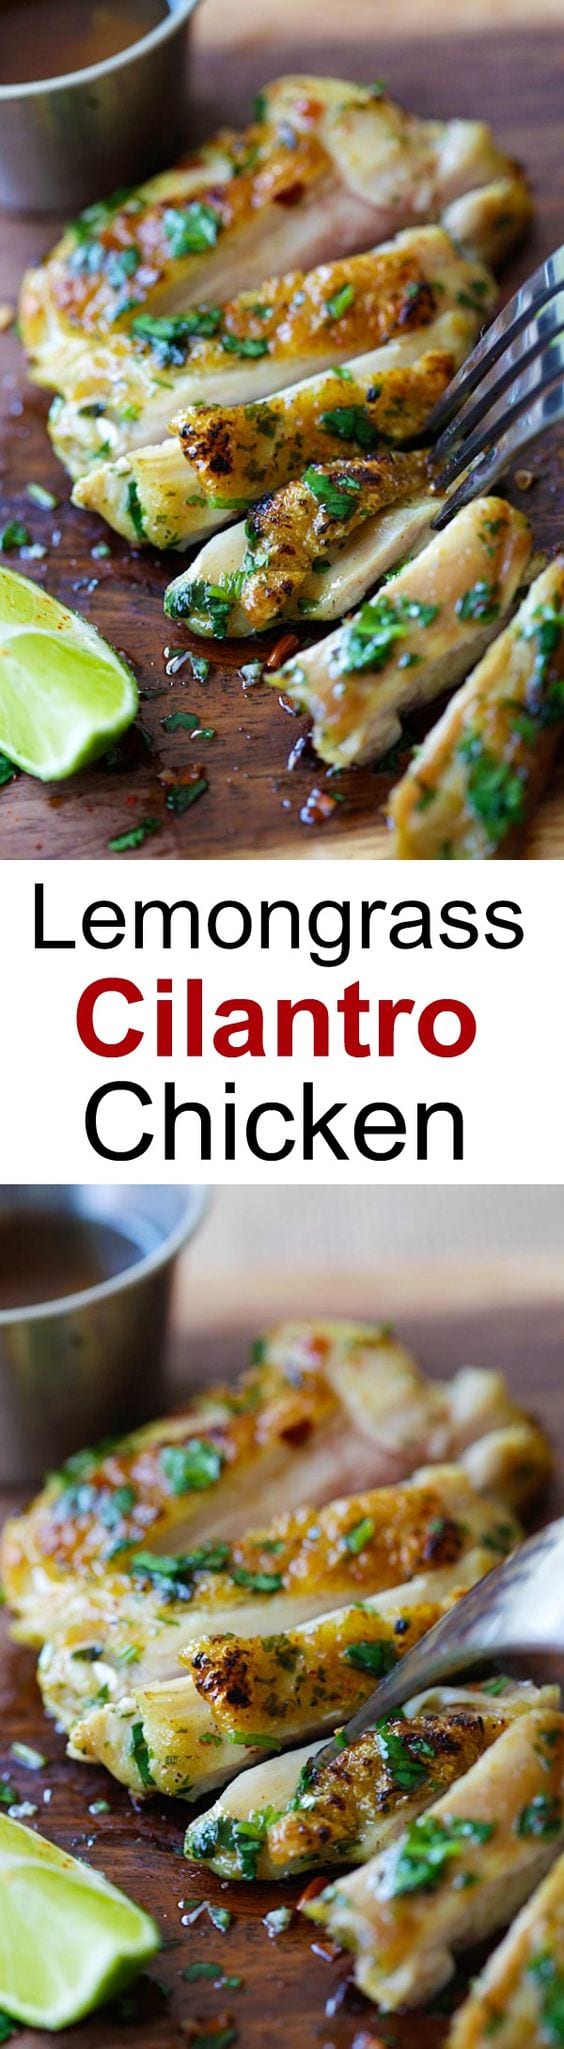 Lemongrass Cilantro Chicken - crazy delicious grilled chicken marinated with lemongrass, cilantro and serve with a sweet and savory honey dipping sauce | rasamalaysia.com